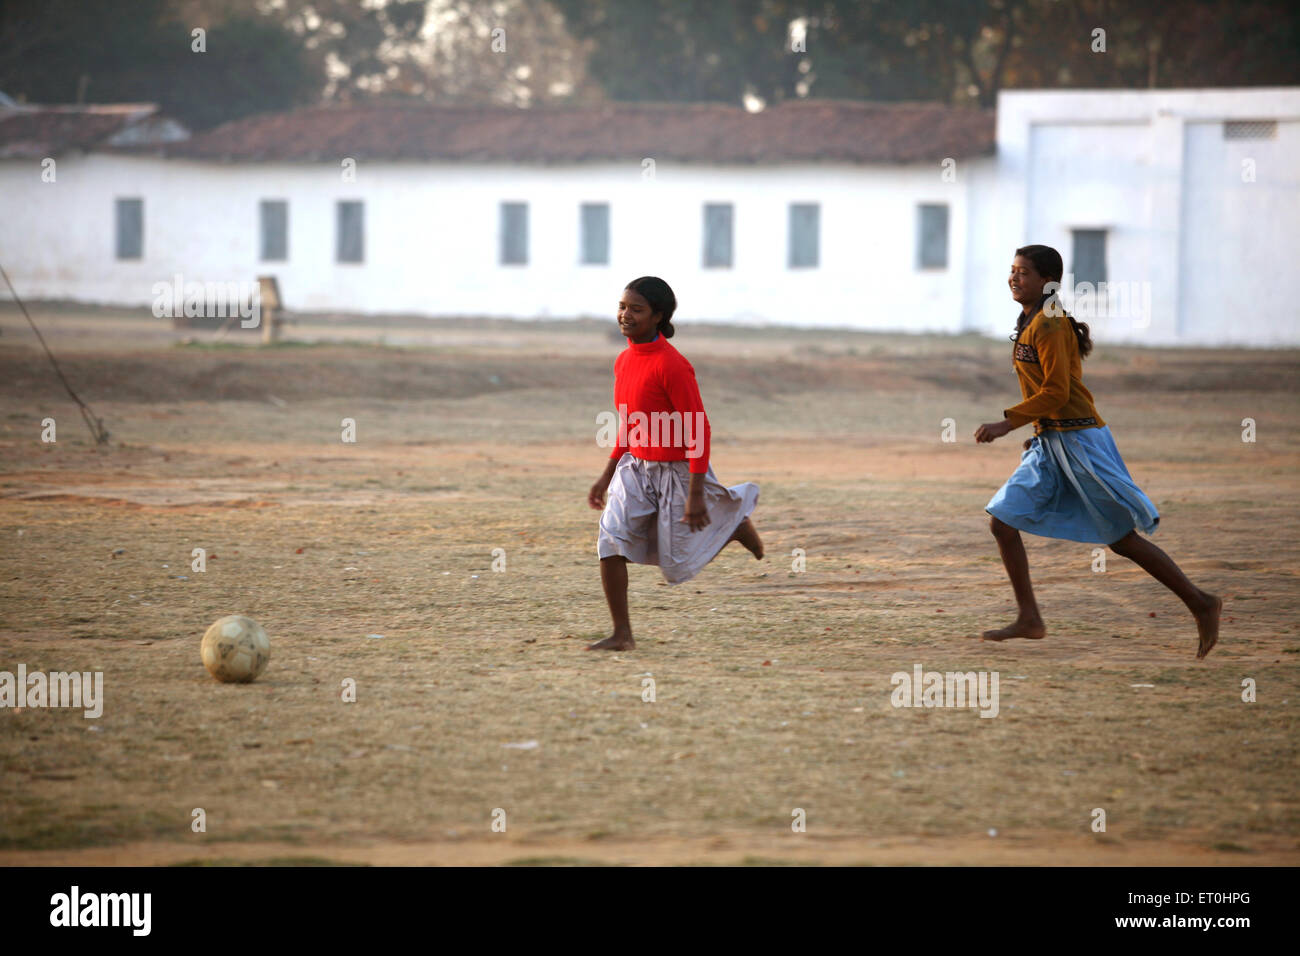 Girls playing football, Jharkhand, India, Indian sports Stock Photo